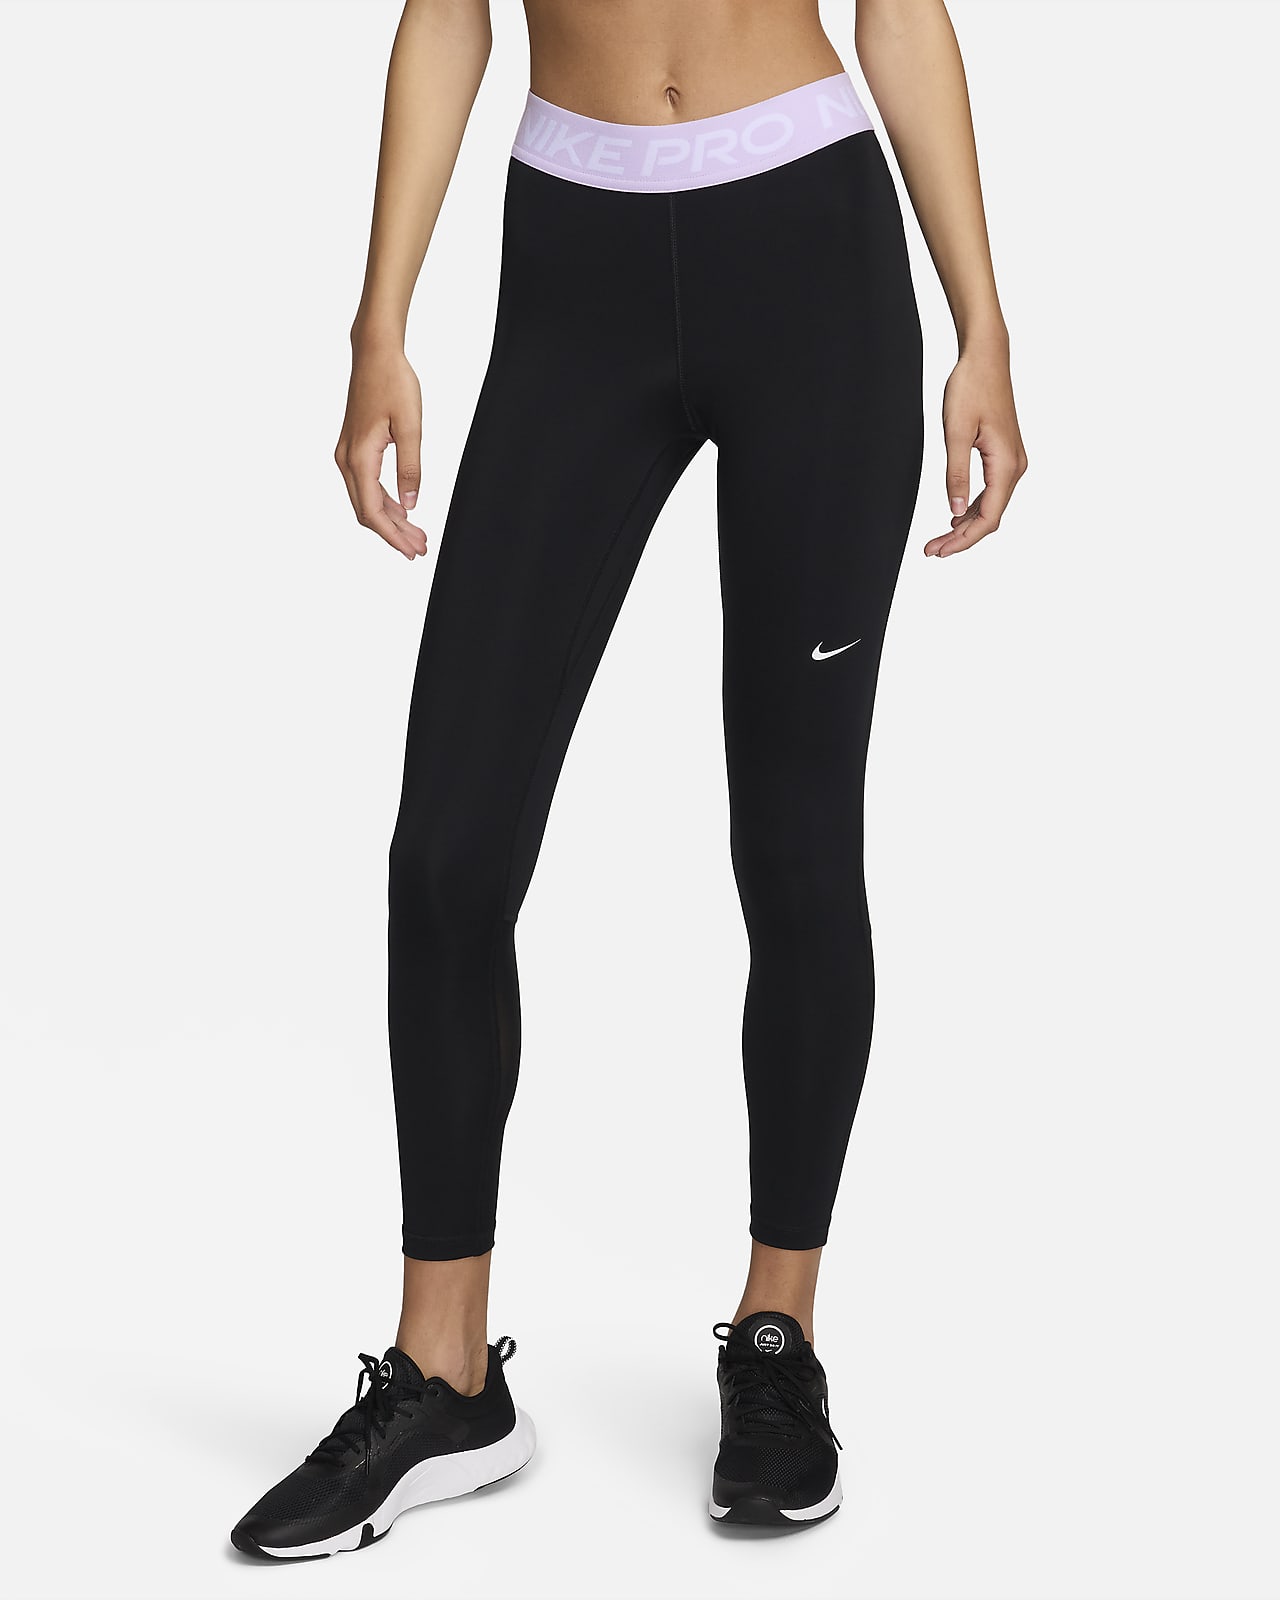 Legging 7/8 taille mi-haute Nike Pro 365 pour femme